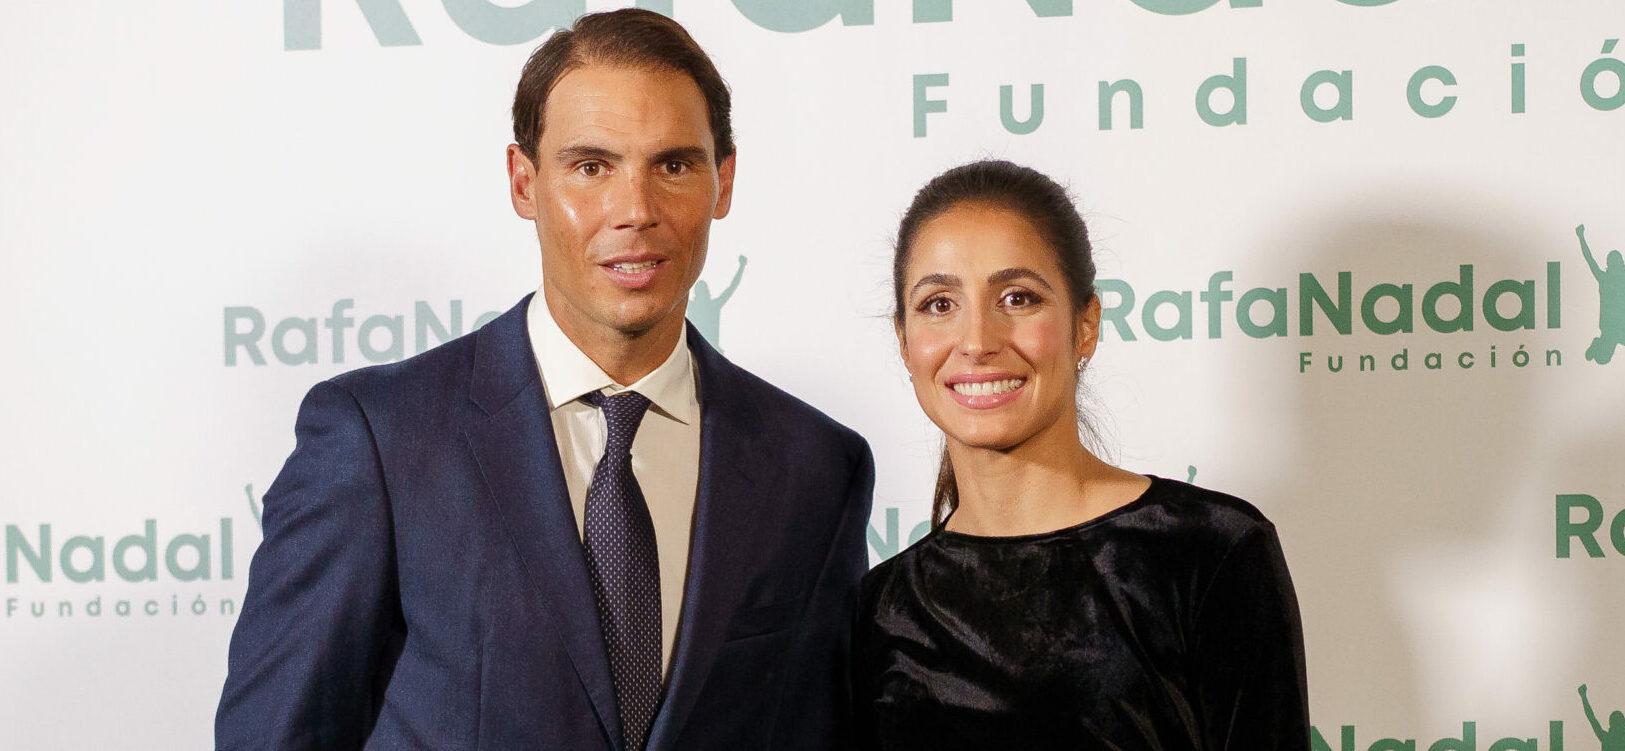 Rafael Nadal and Maria Perello